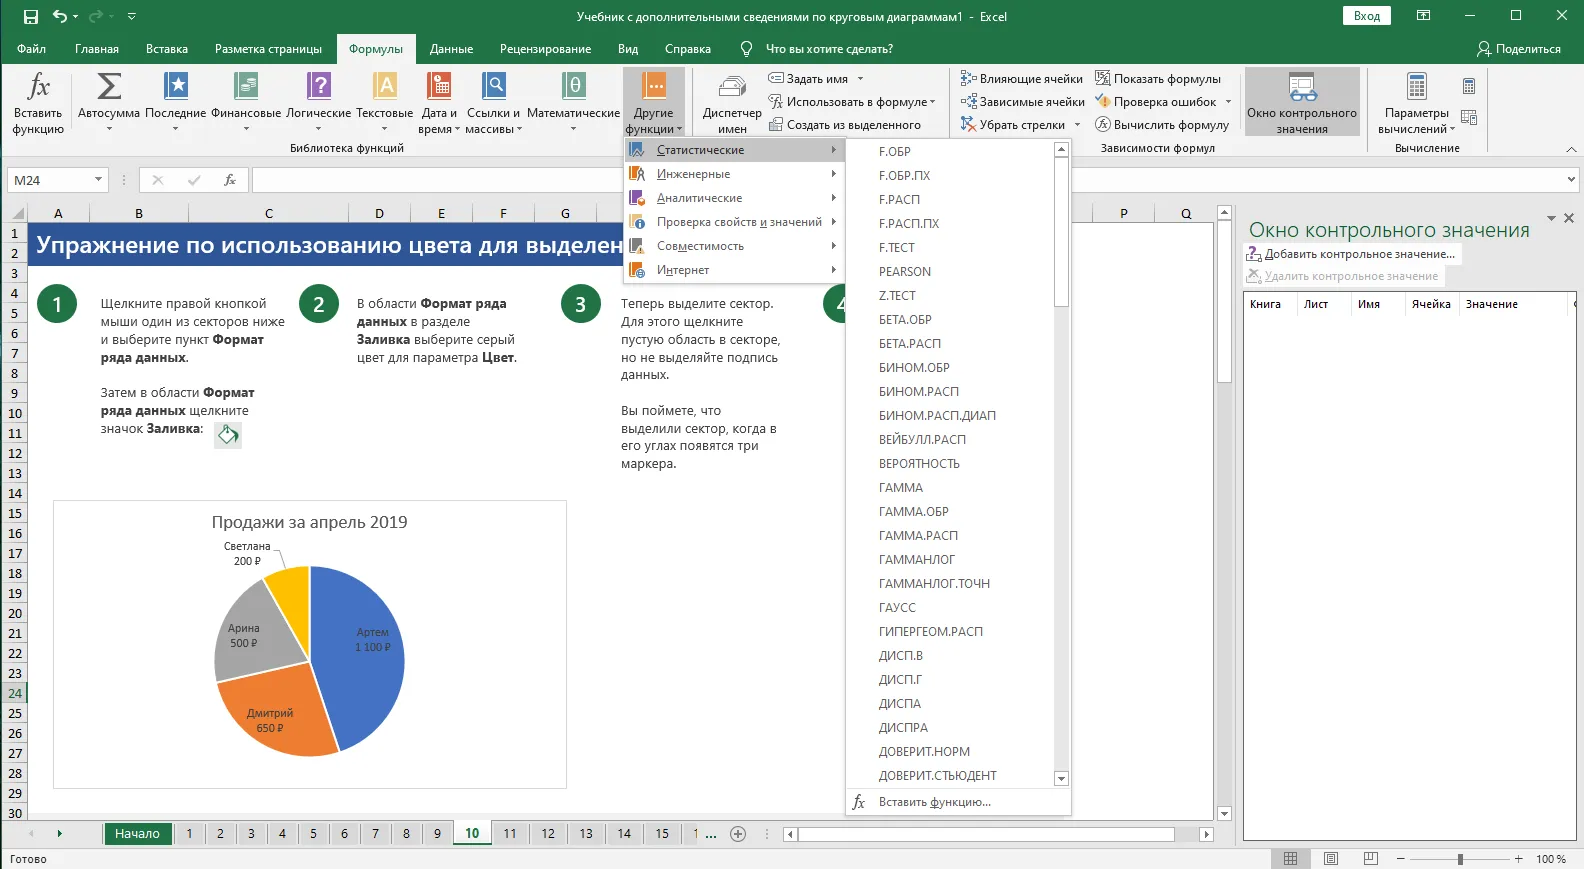 Microsoft Excel 2020